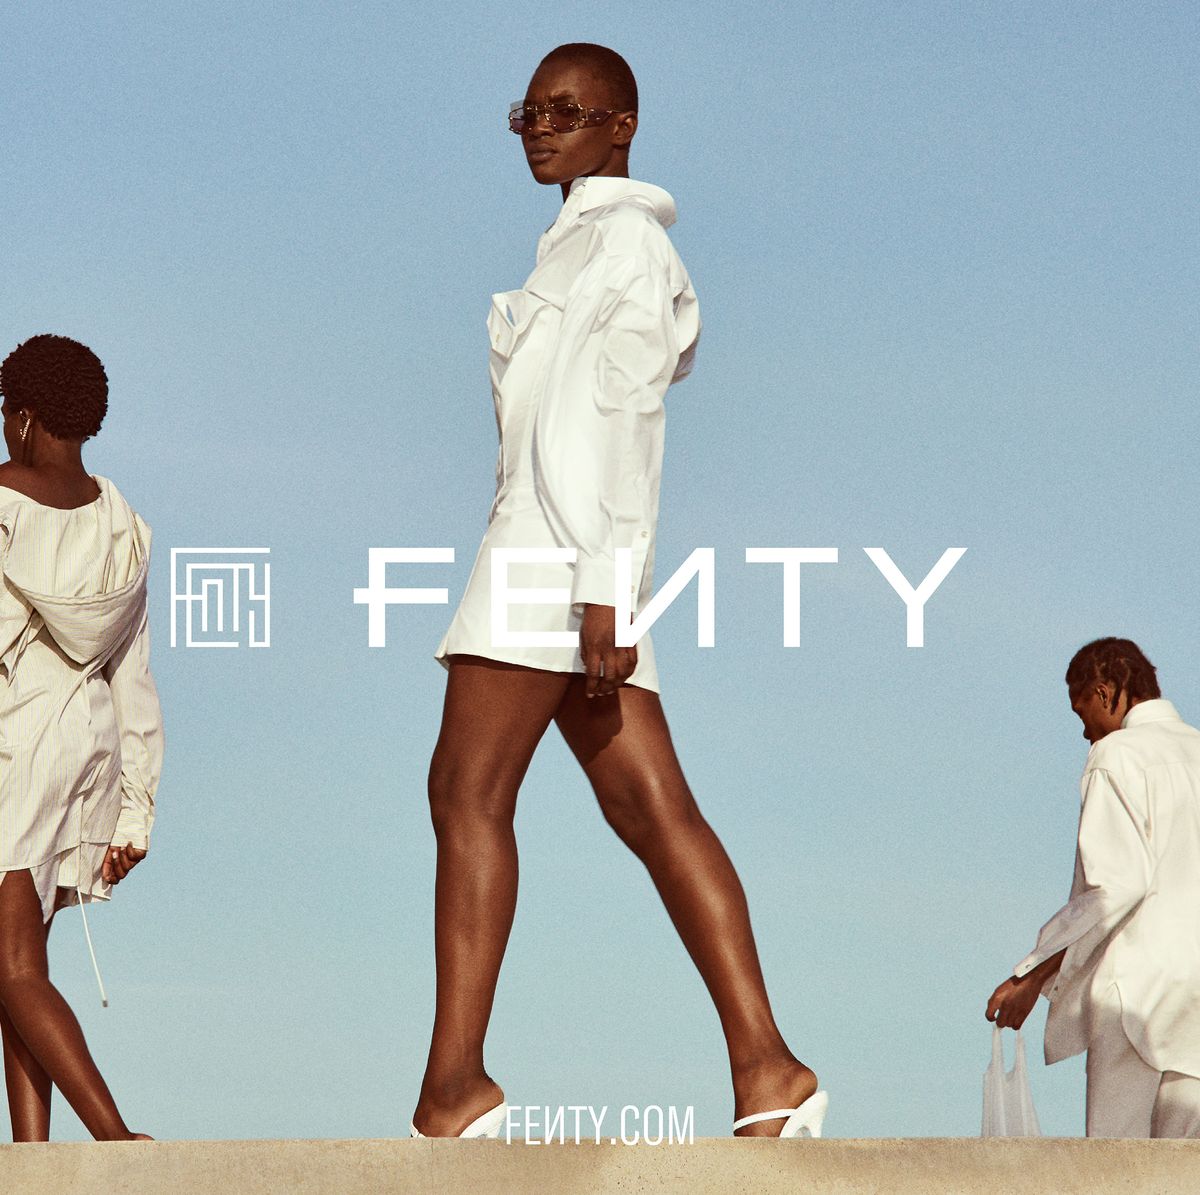 Rihanna partners with LVMH on Fenty luxury brand 